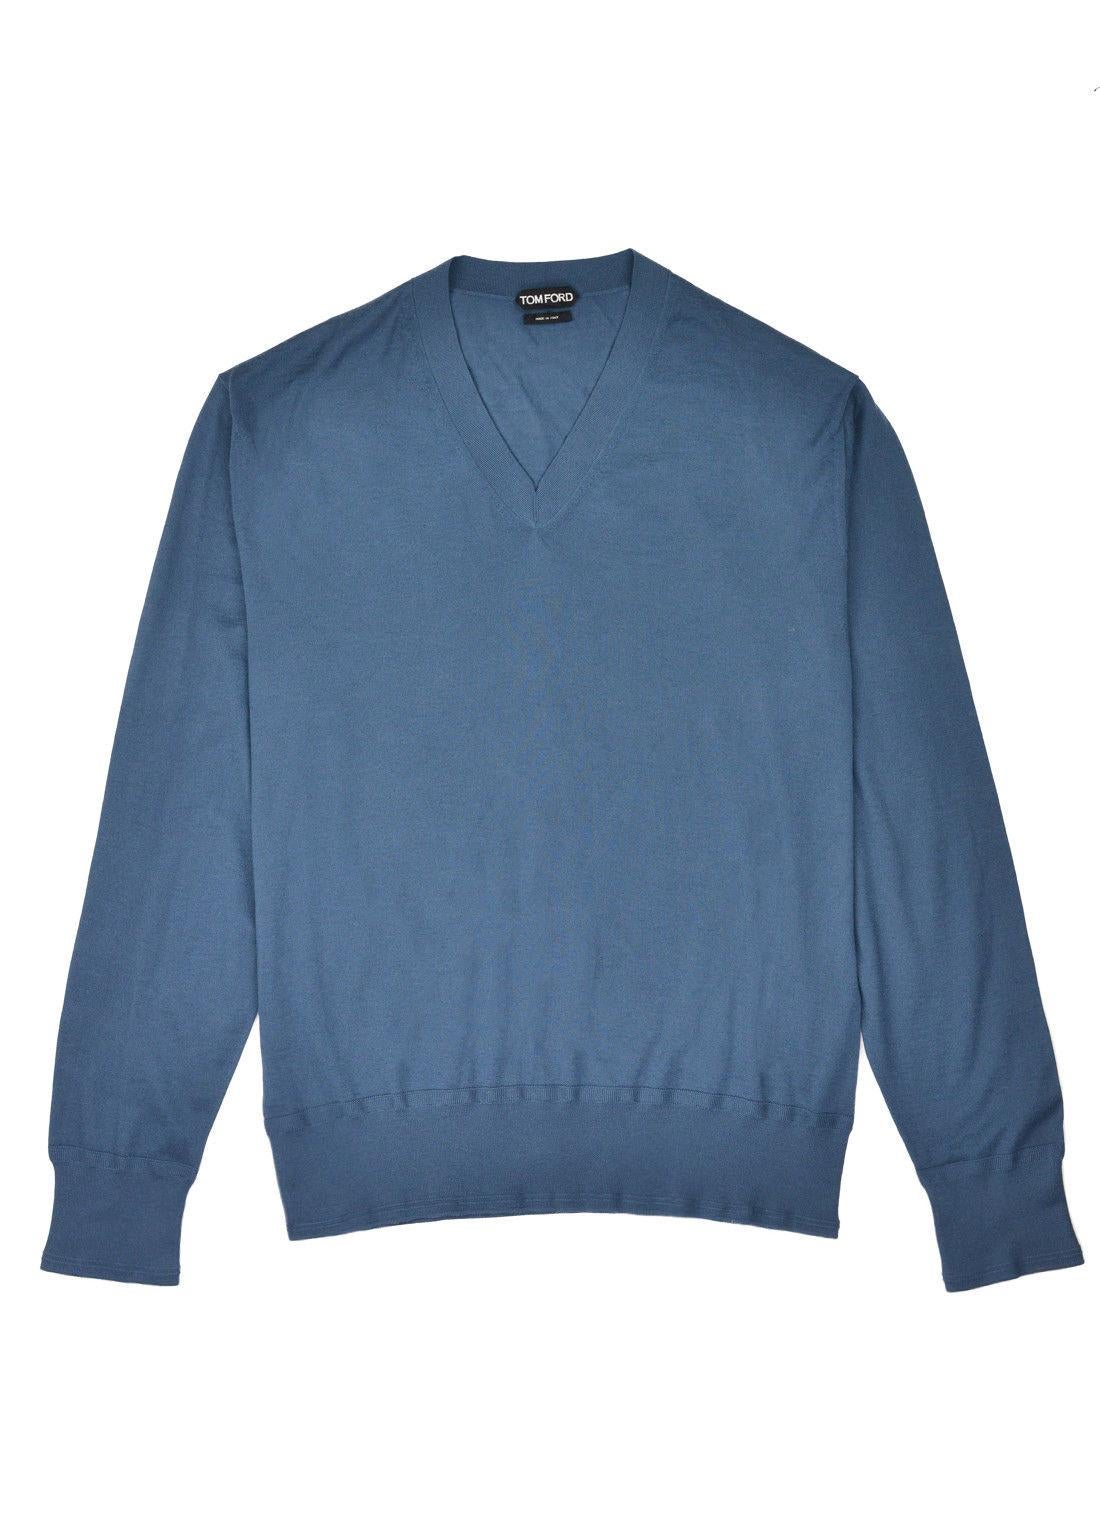 Men's Tom Ford Mens Cashmere Blue V Neck Long Sleeve Sweater Size IT44/US34~RTL$1450 For Sale